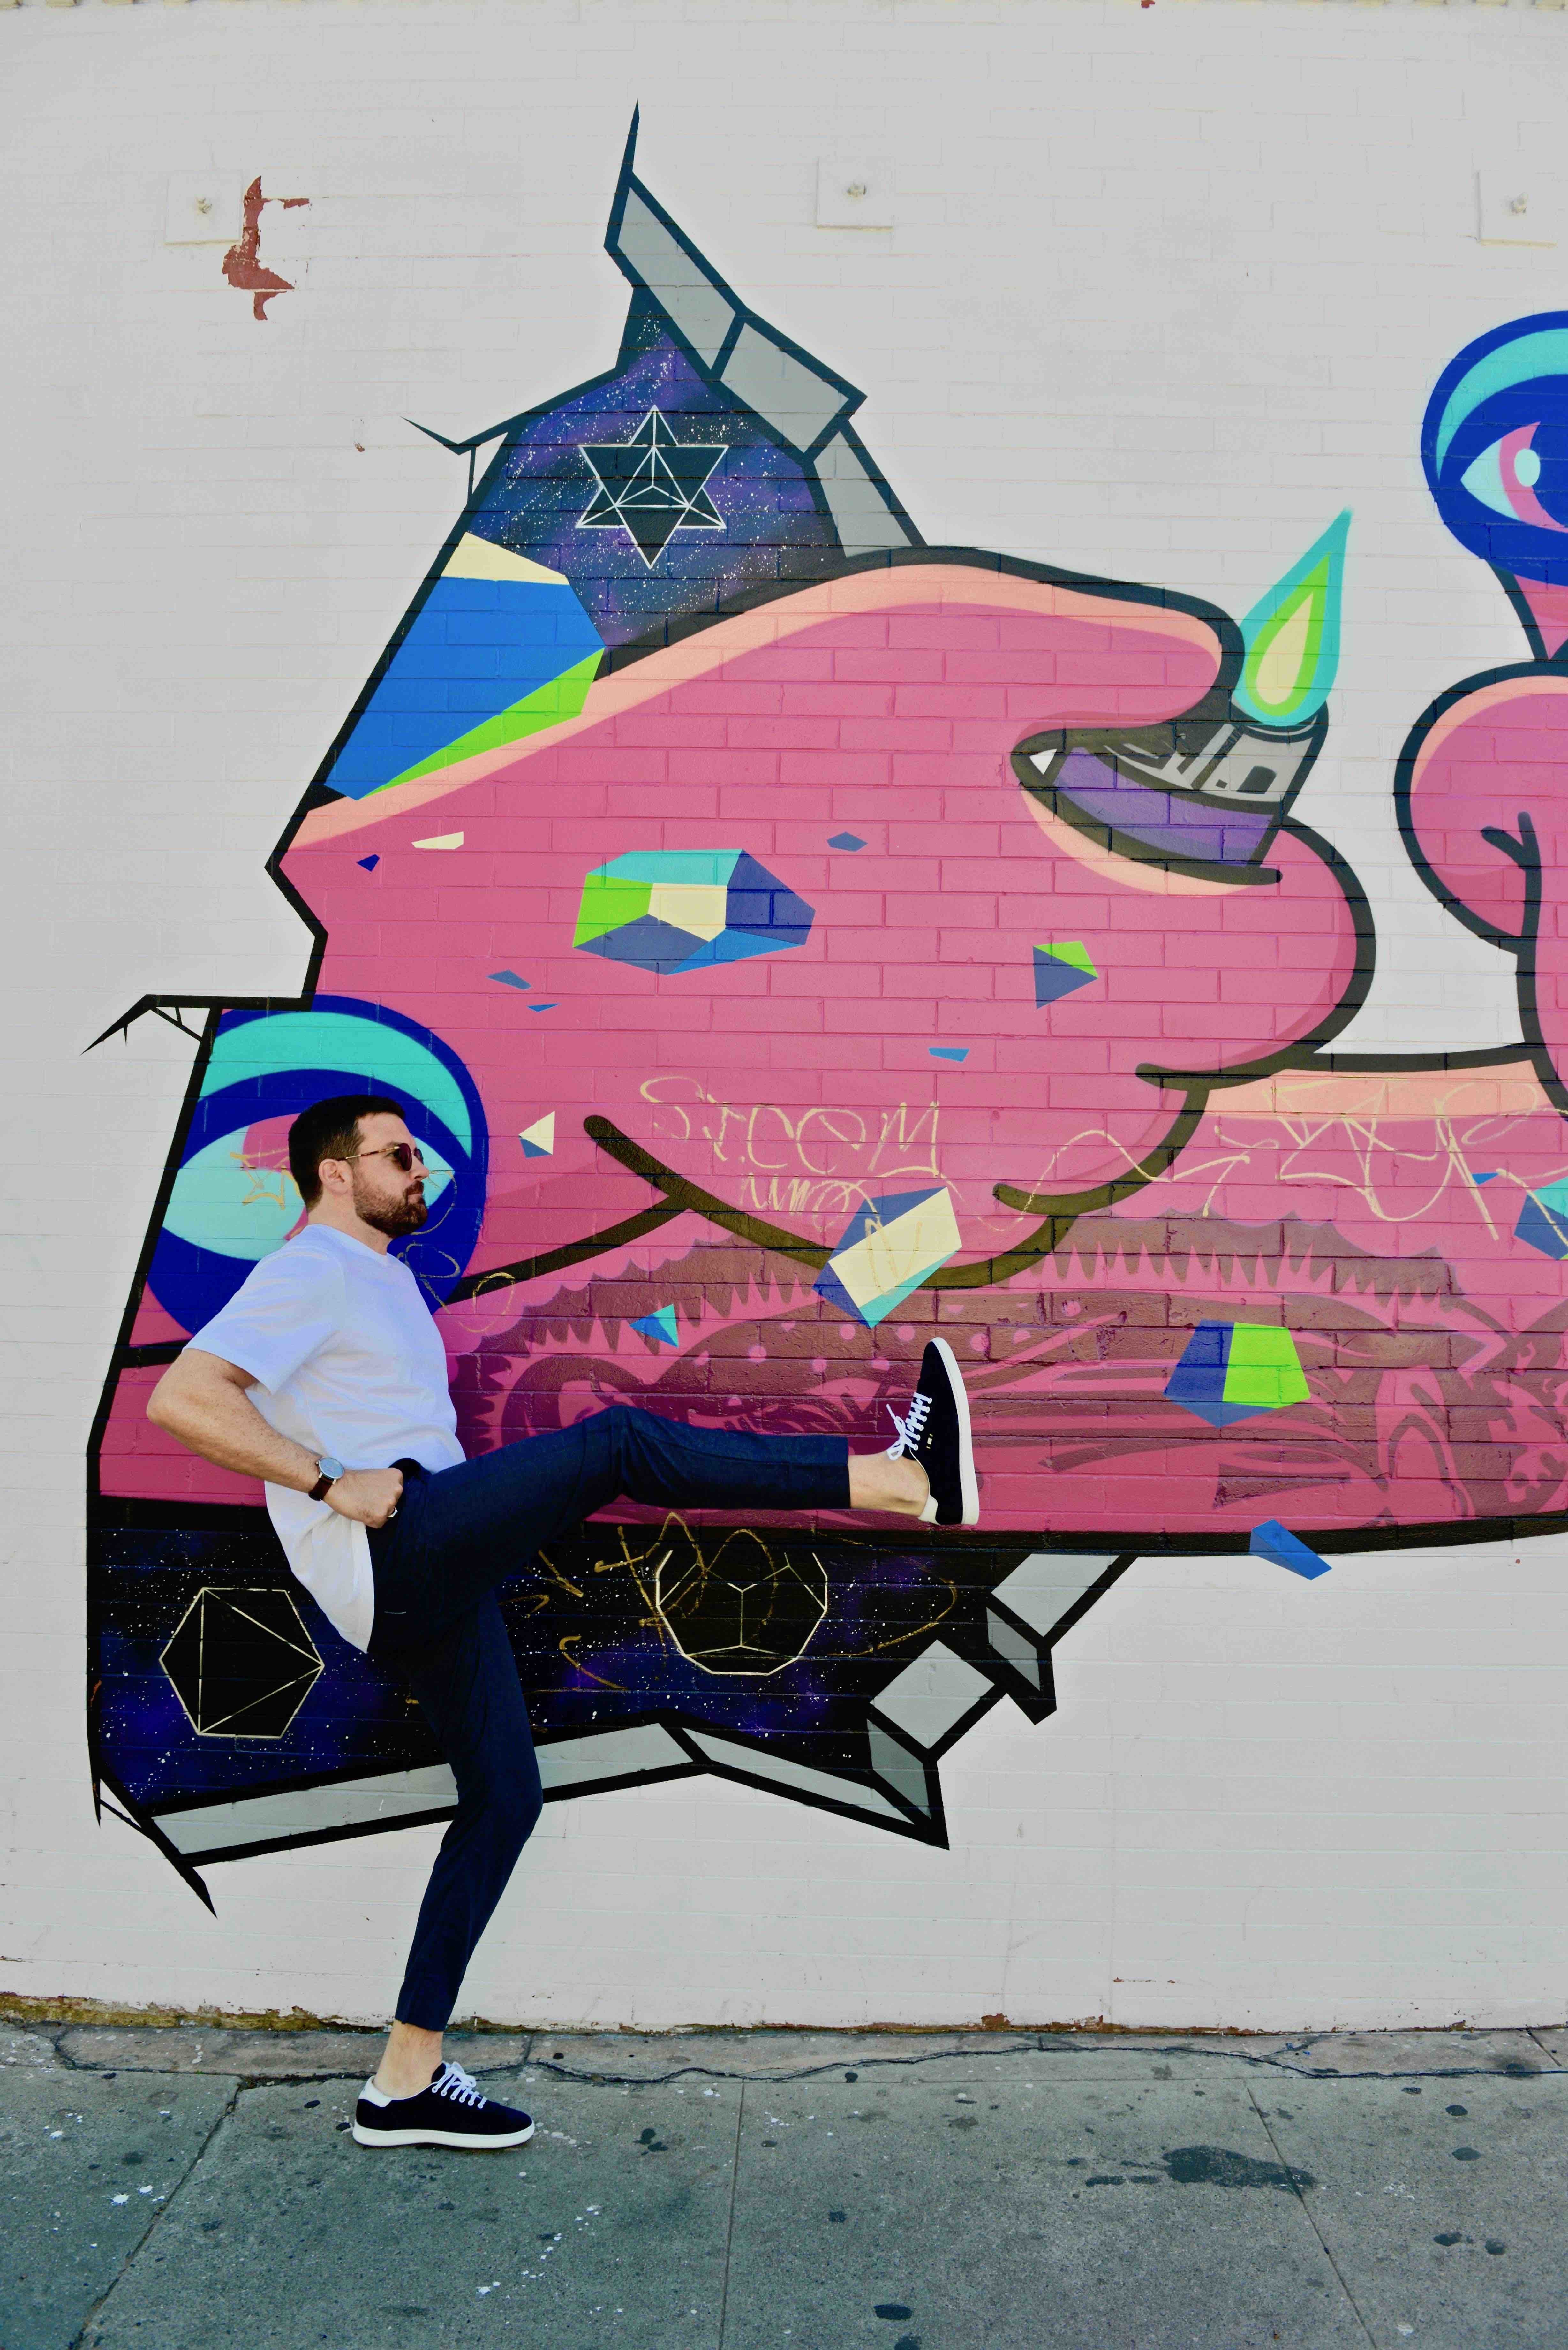 Adam kicking in front of mural